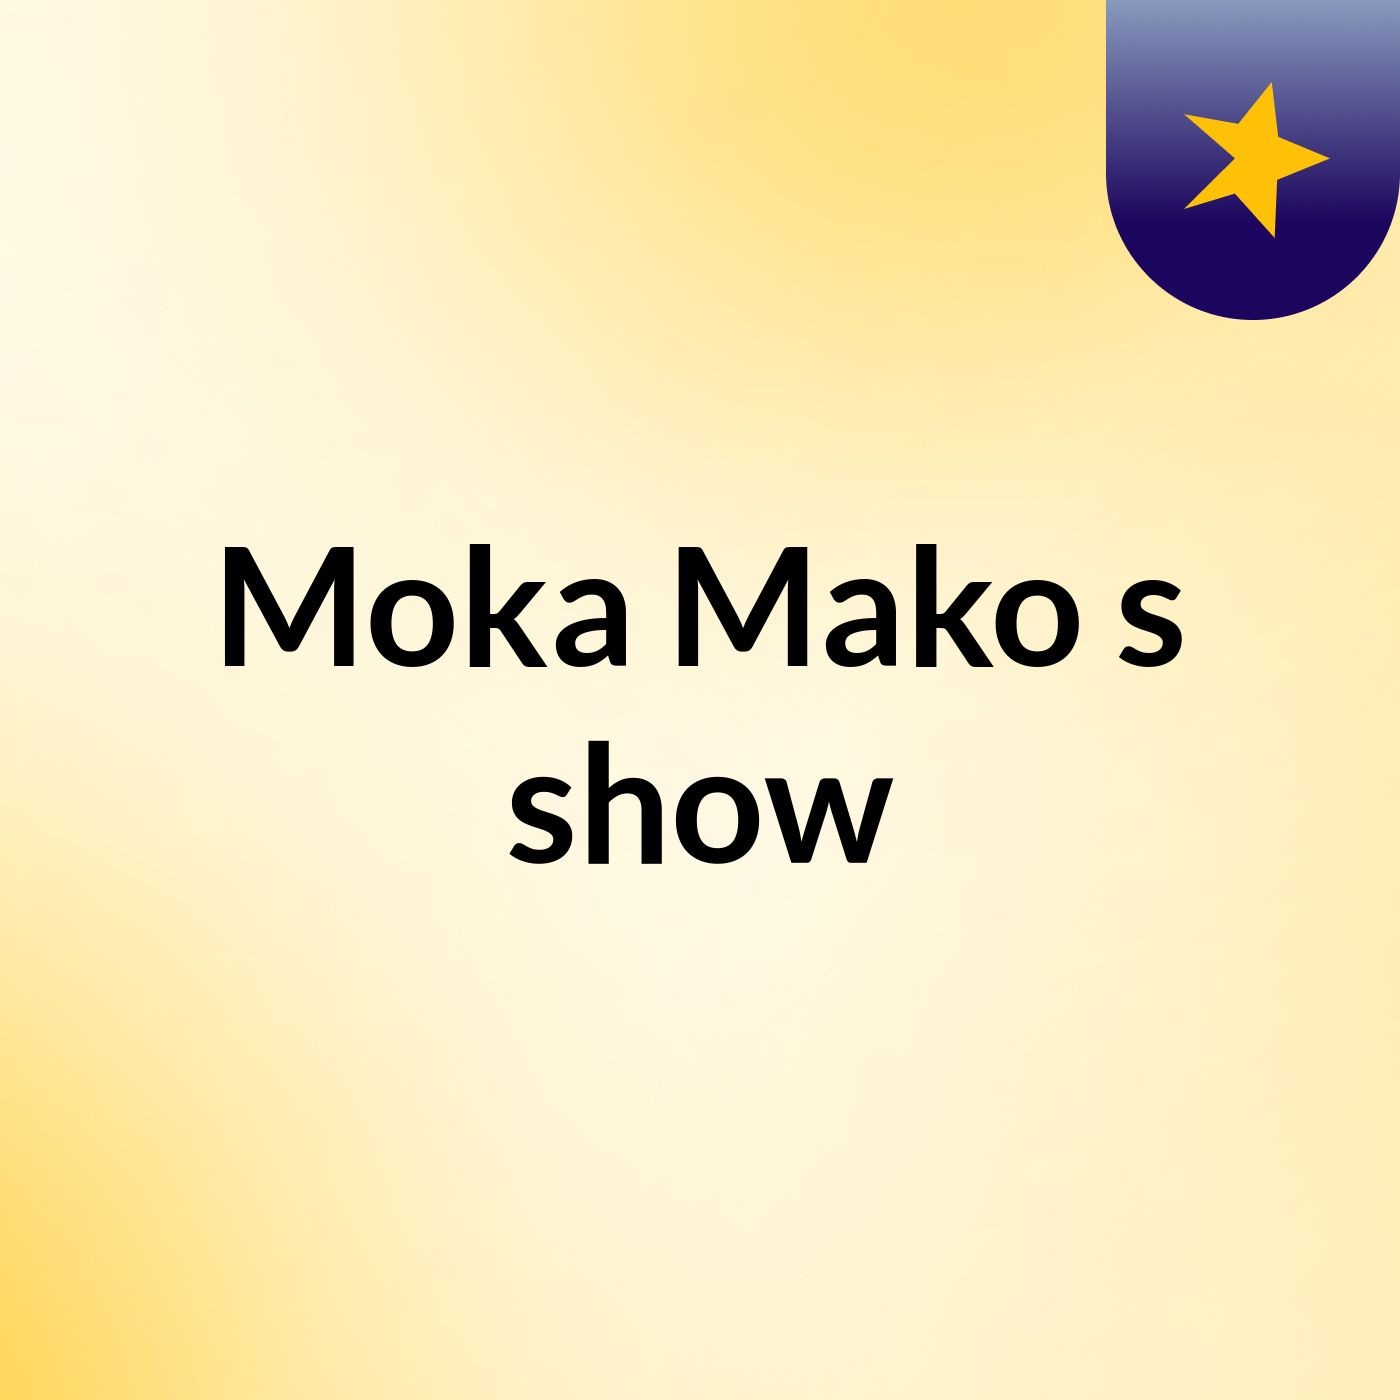 Moka Mako's show